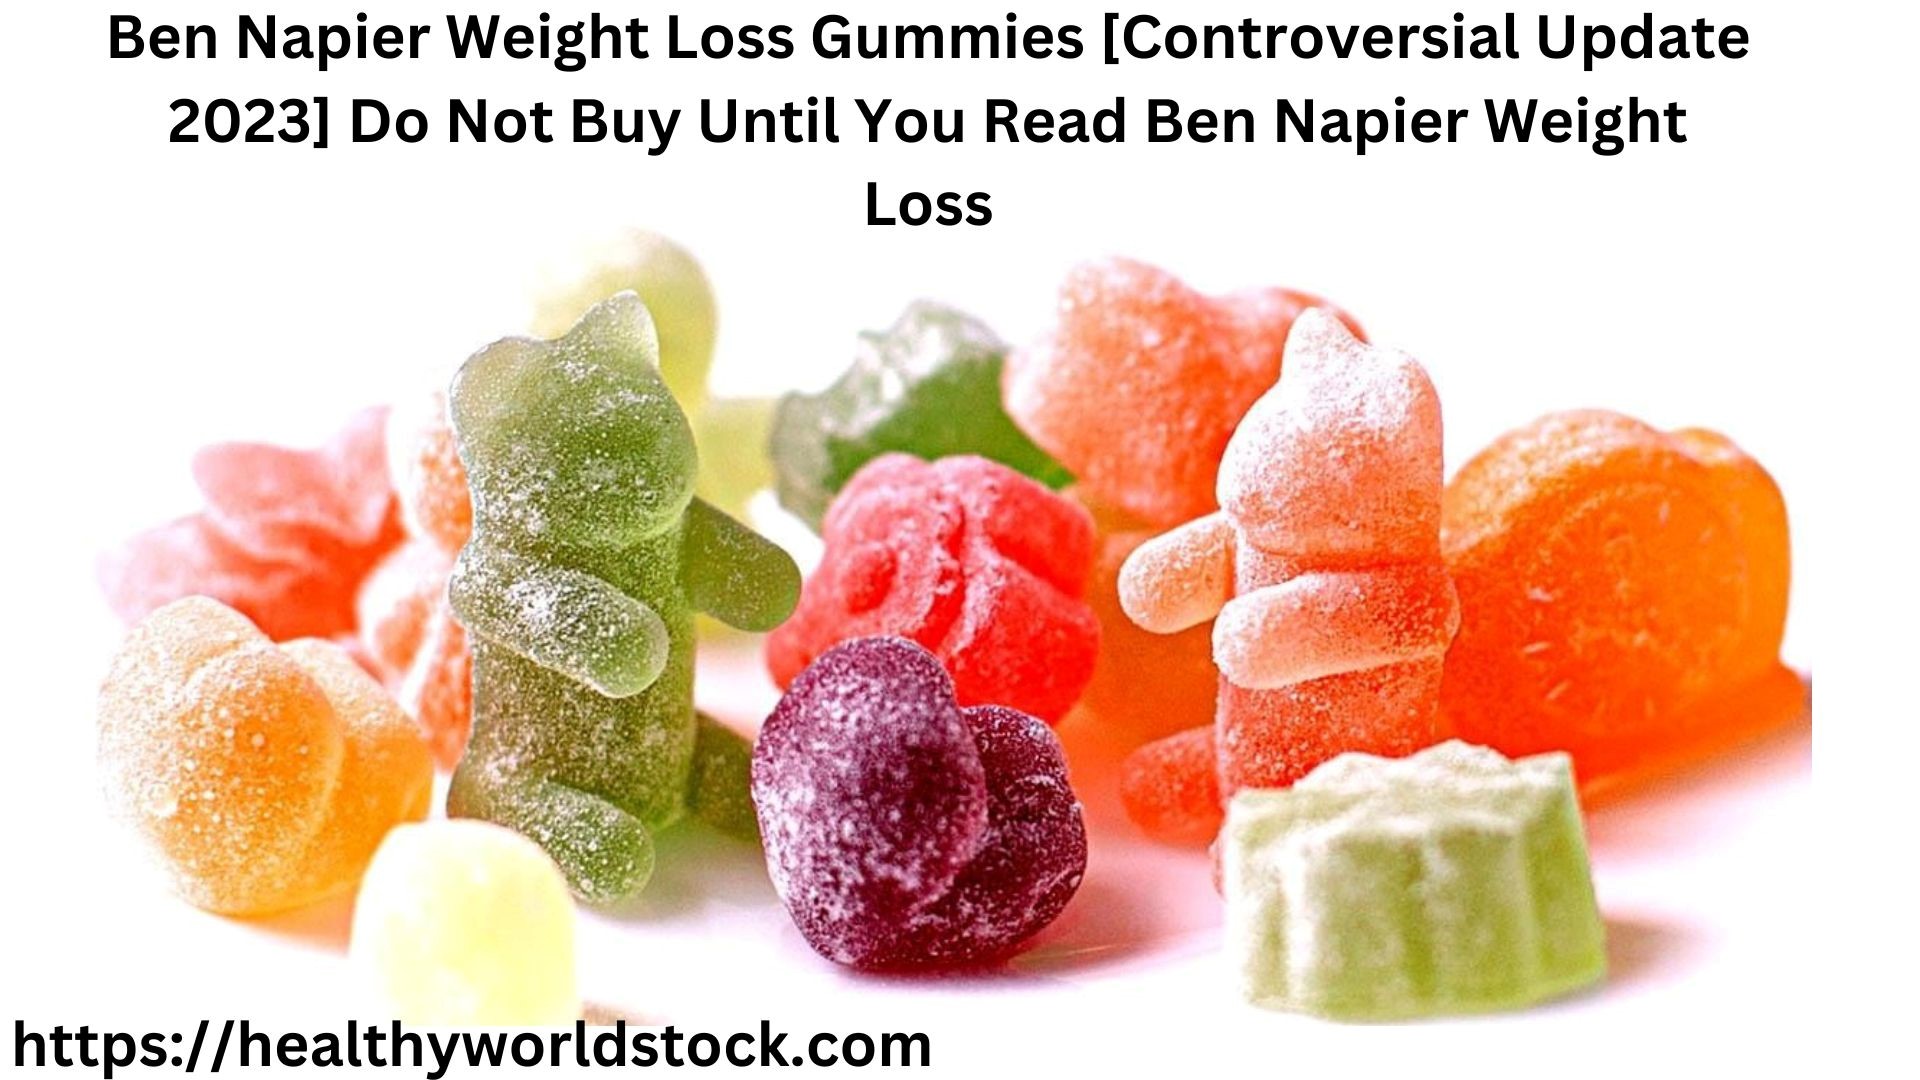 Ben Napier Weight Loss Gummies [Controversial Update 2023] Do Not Buy Until You Read Ben Napier Weight Loss